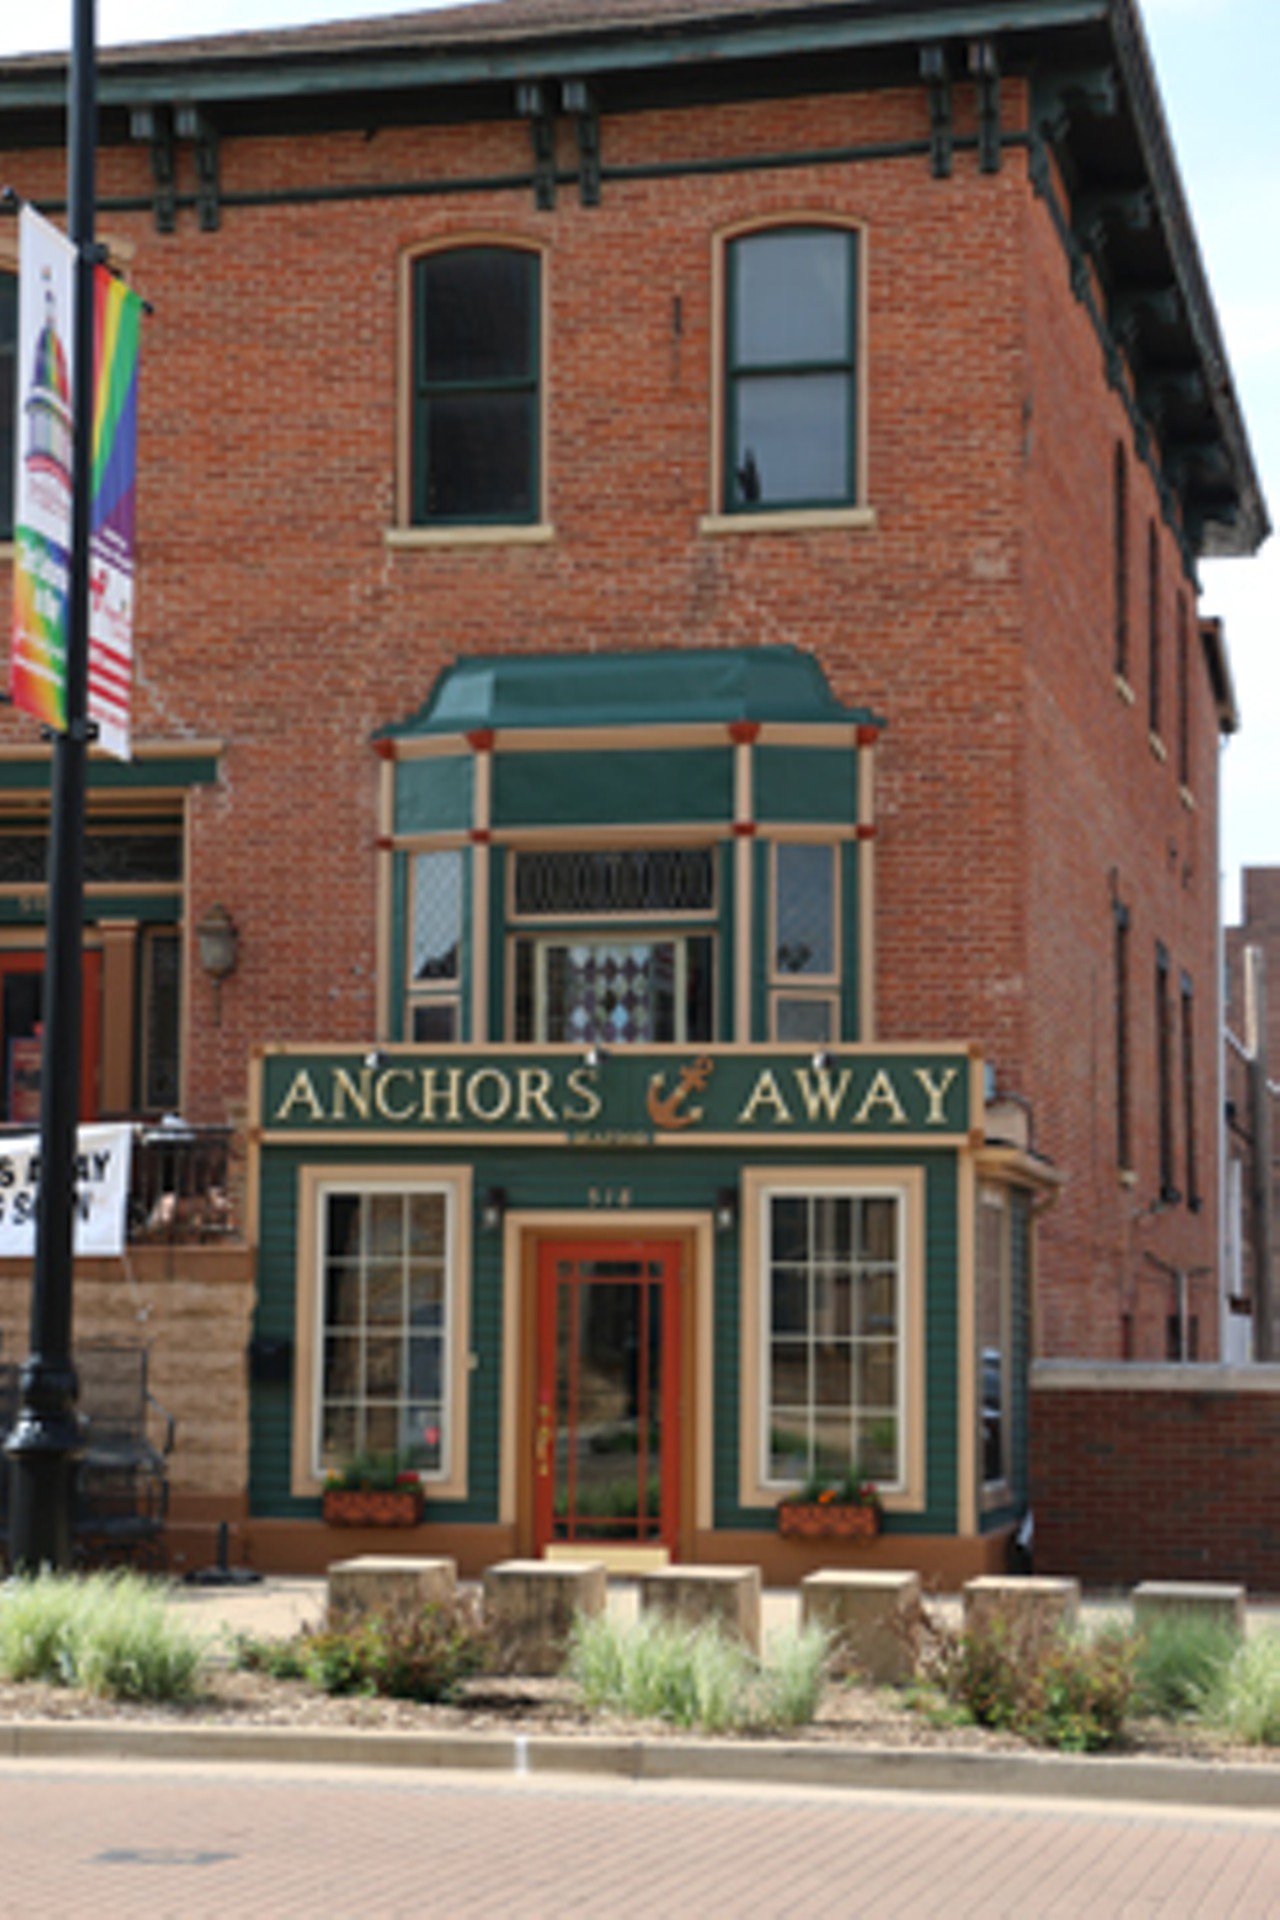 Anchors Away has closed, Comings & Goings